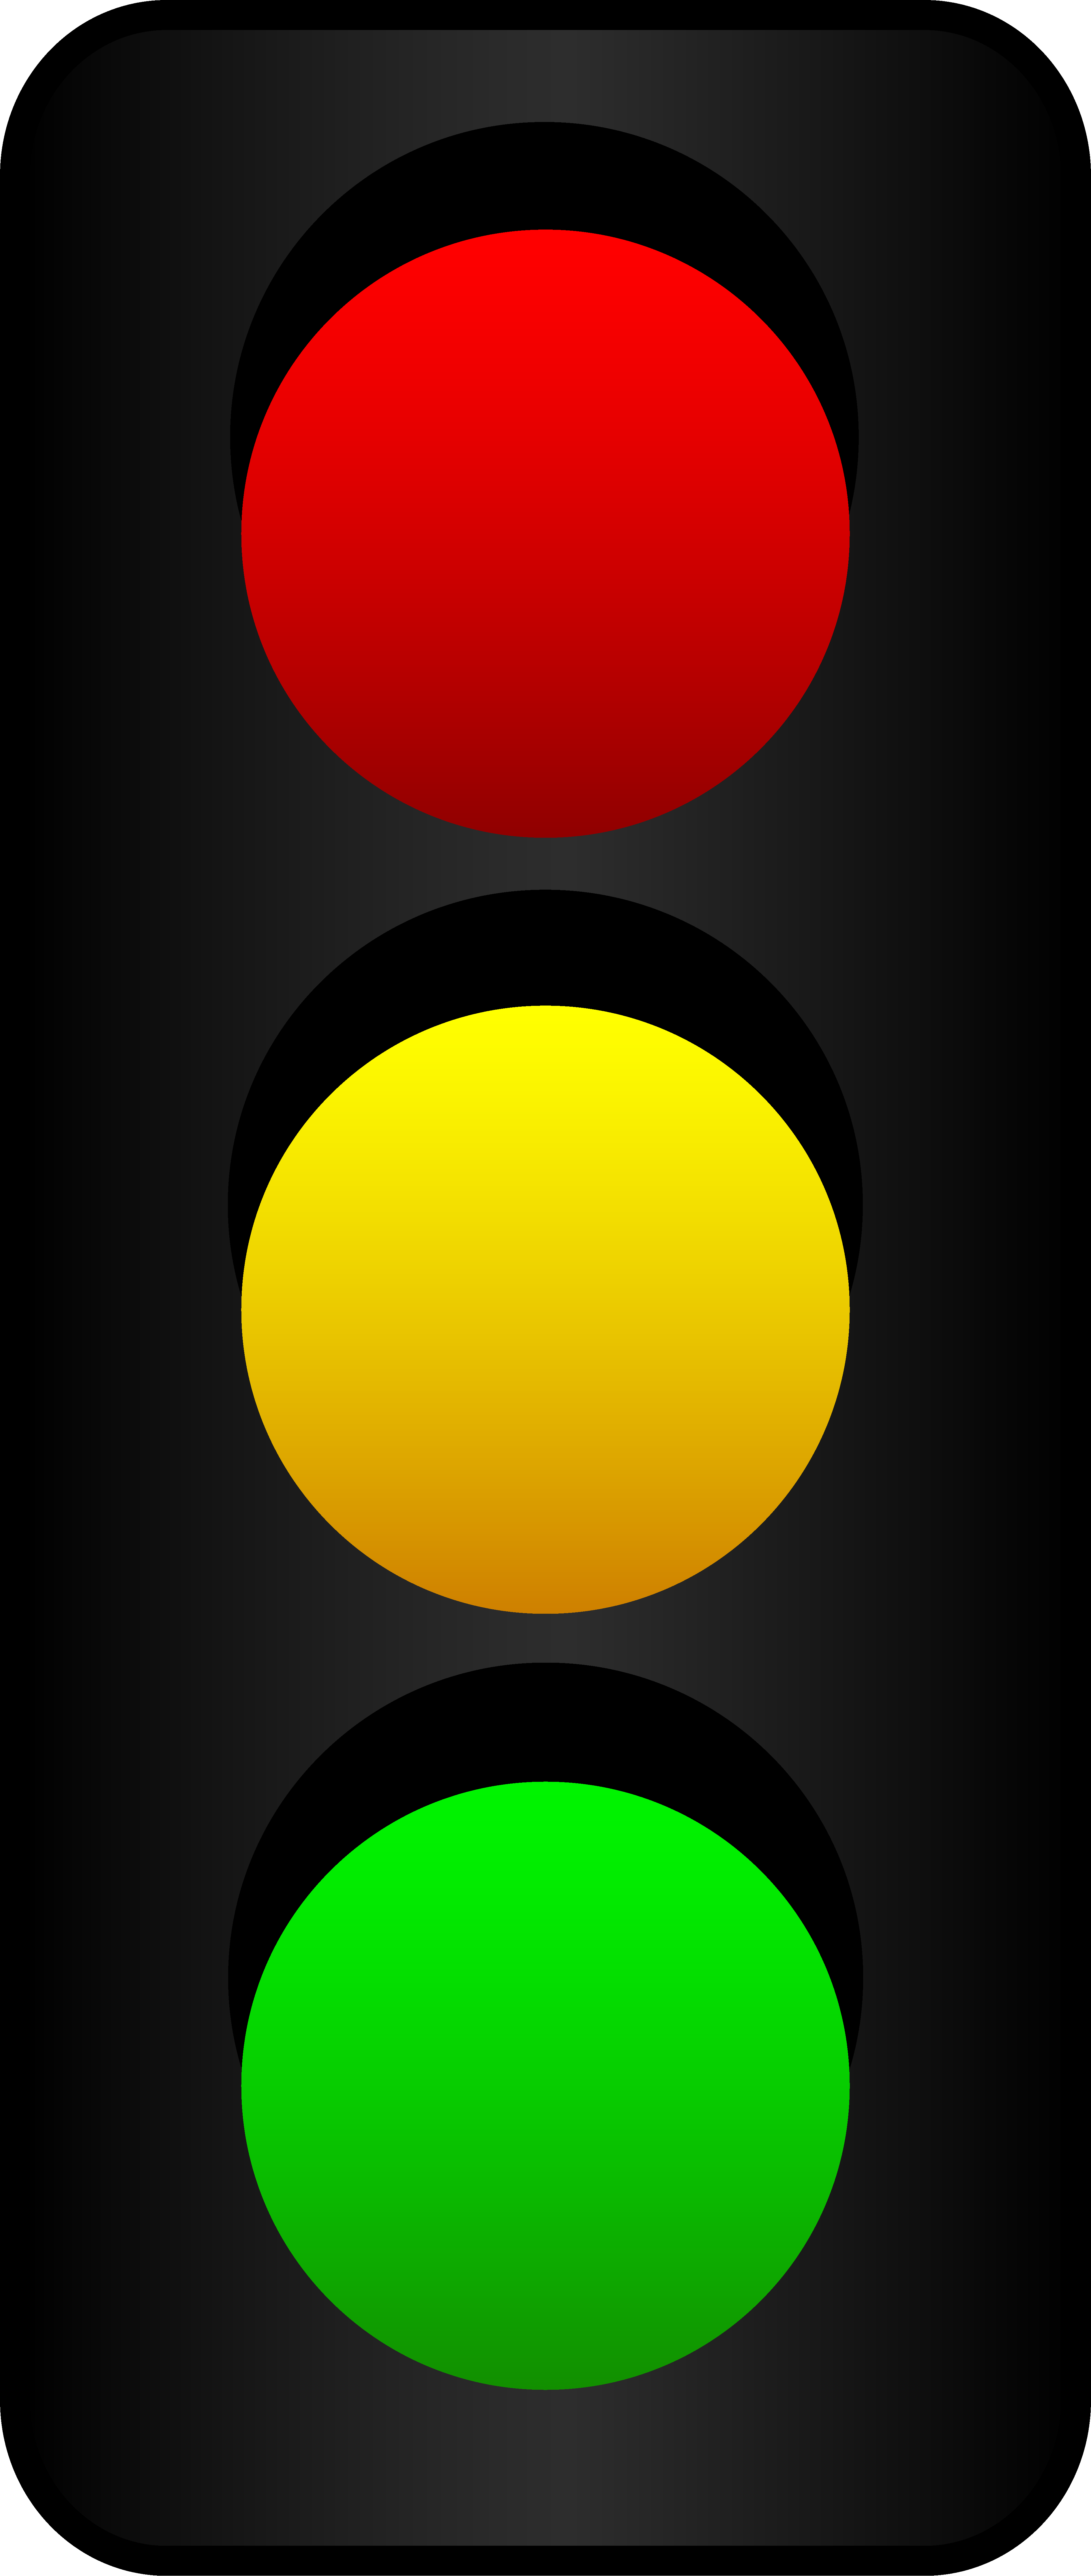 Stoplight clipart tumundograf - Stoplight Clipart